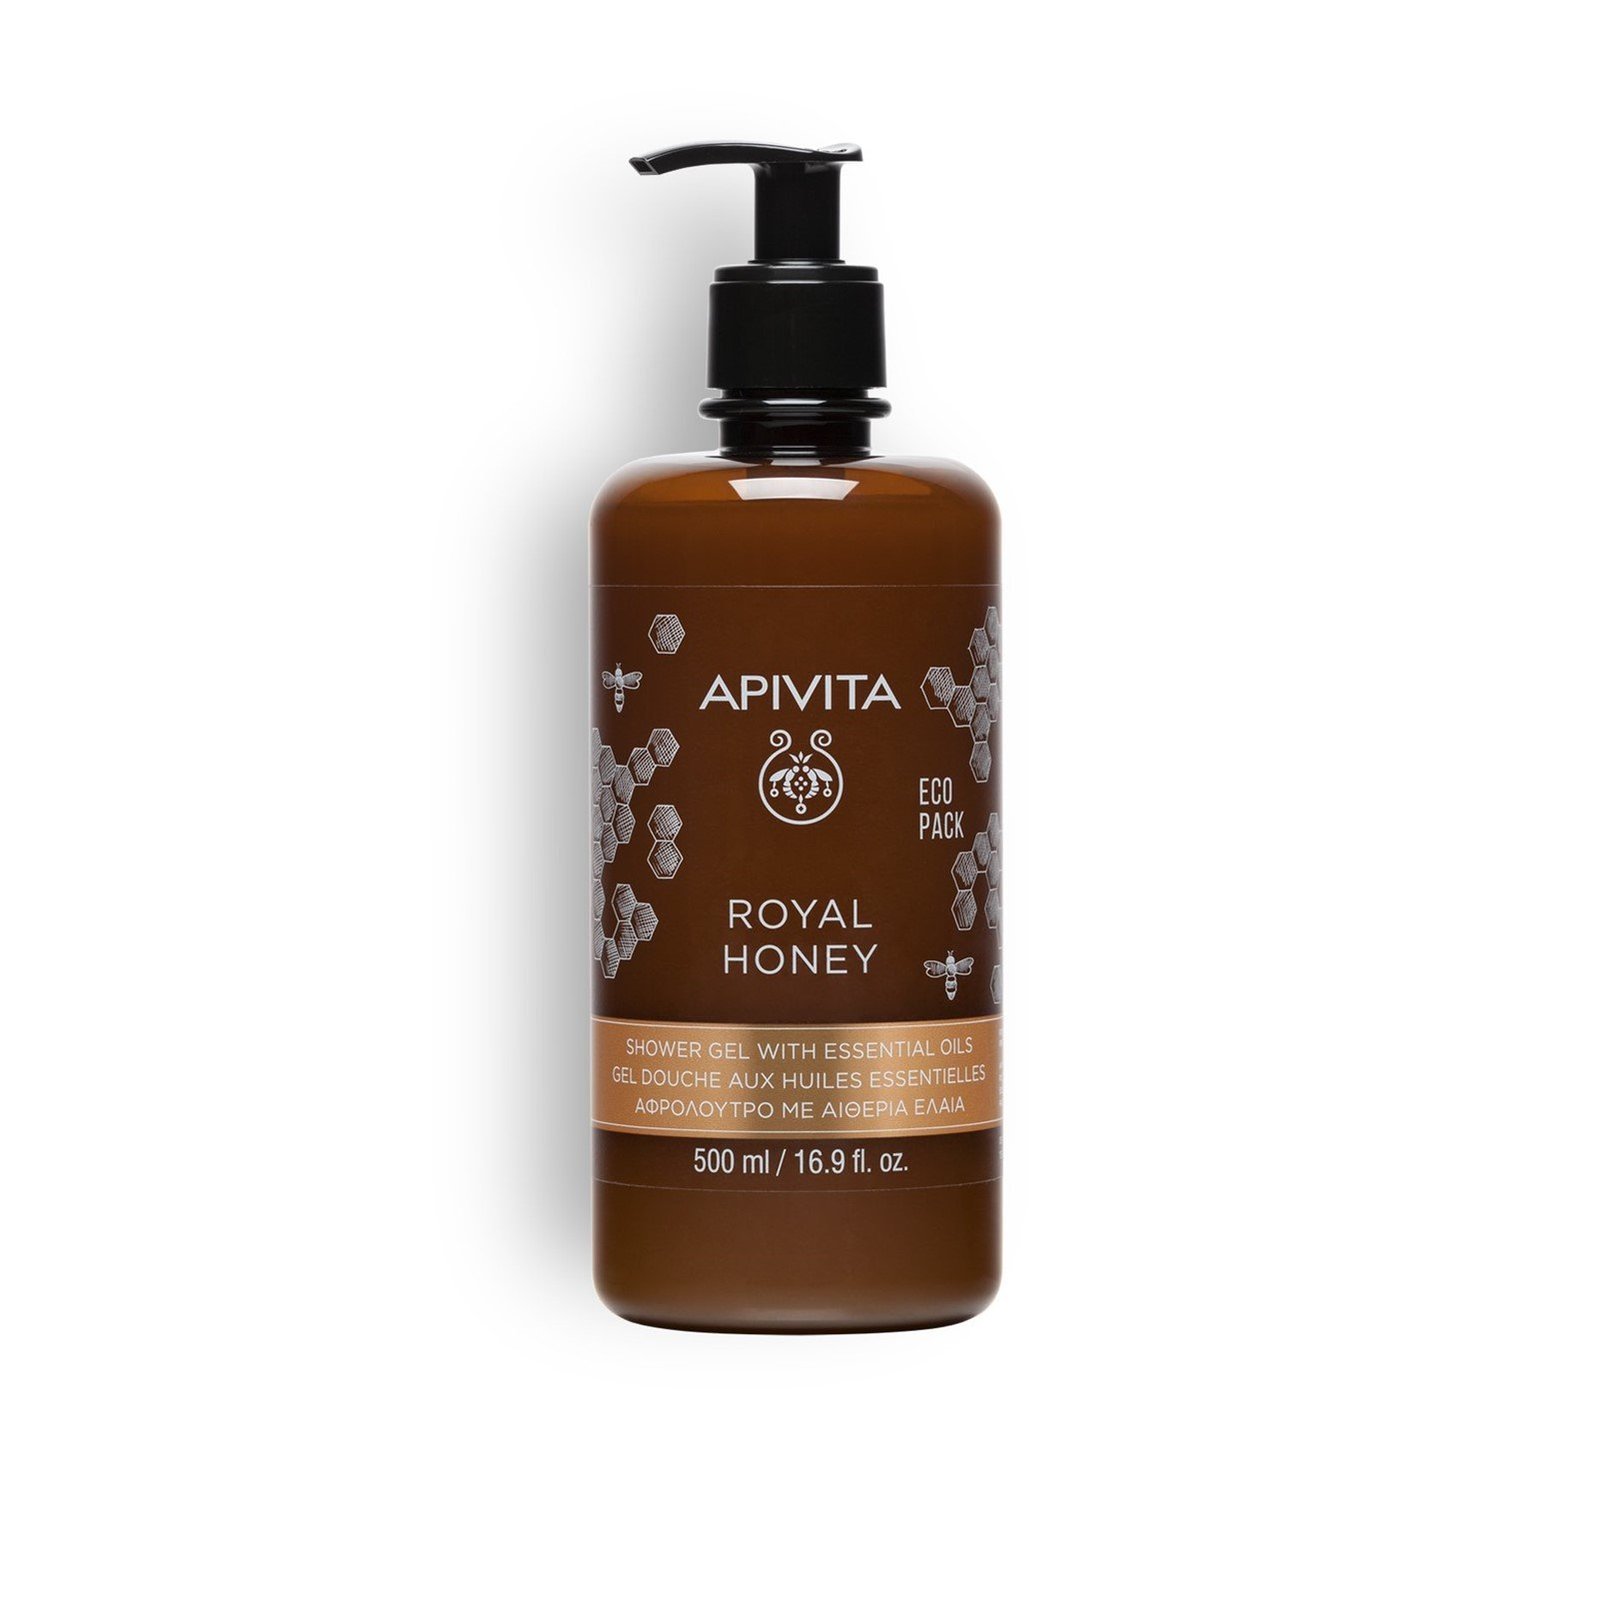 APIVITA Royal Honey Shower Gel Essential Oils 500ml (16.9 fl oz)